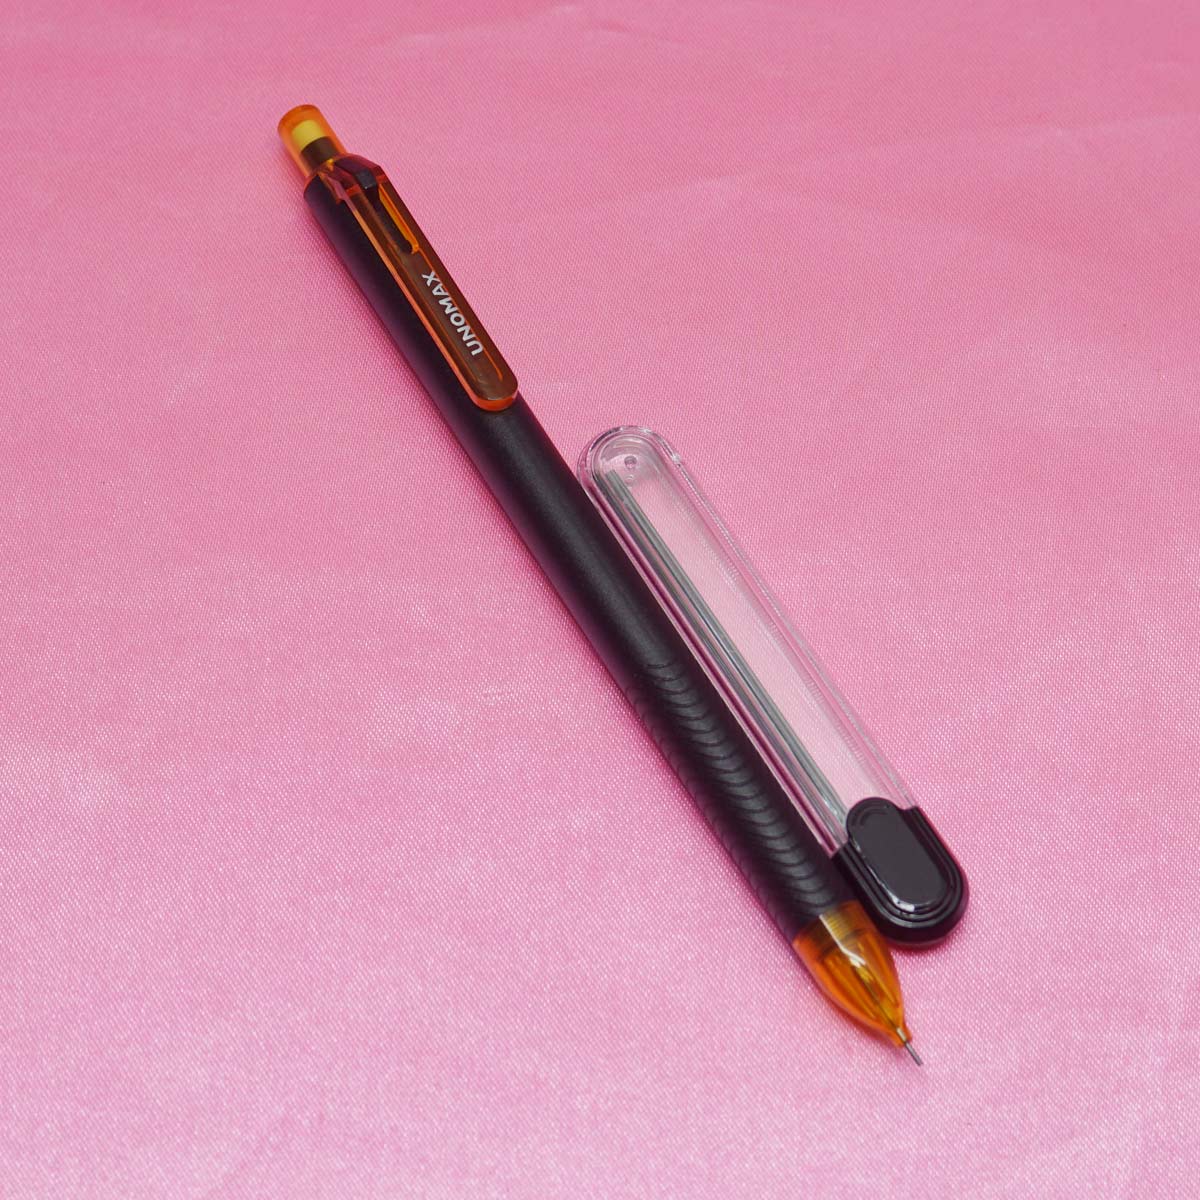 Unomax Mechtron 0.7 Black Color Body With Orange Clip Mechanical Pencil SKU 22015